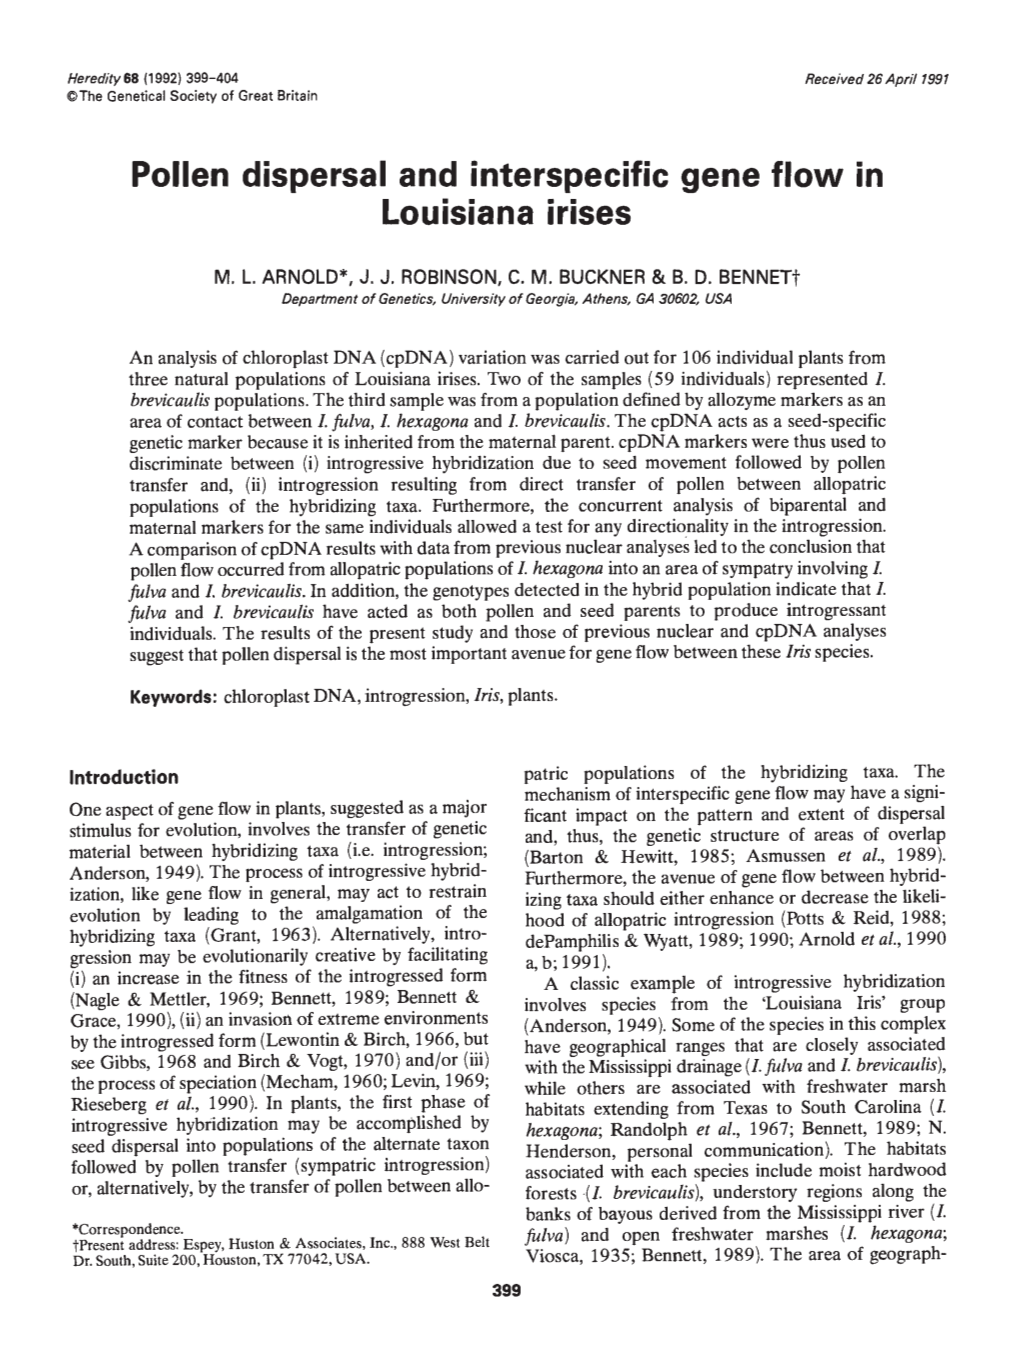 Pollen Dispersal and Interspecific Gene Flow in Louisiana Irises